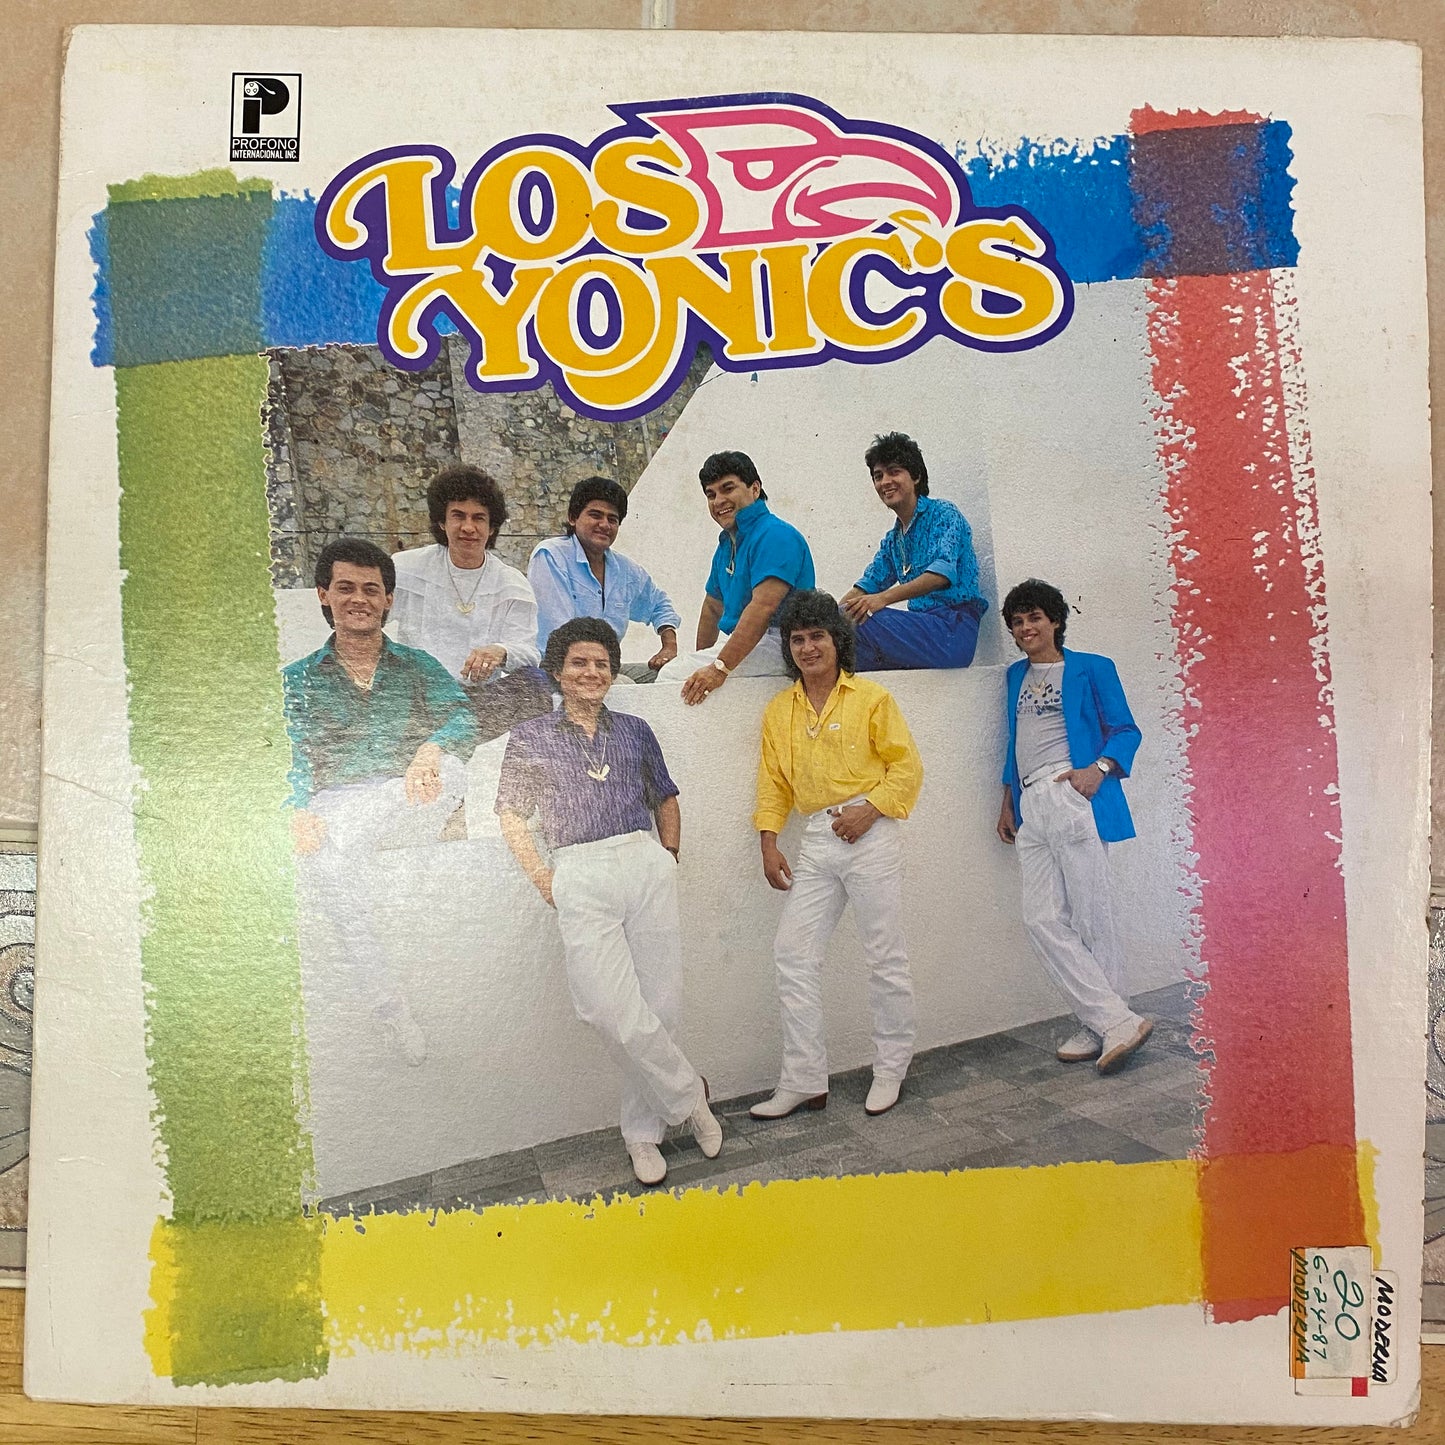 Los Yonics (Vinyl)